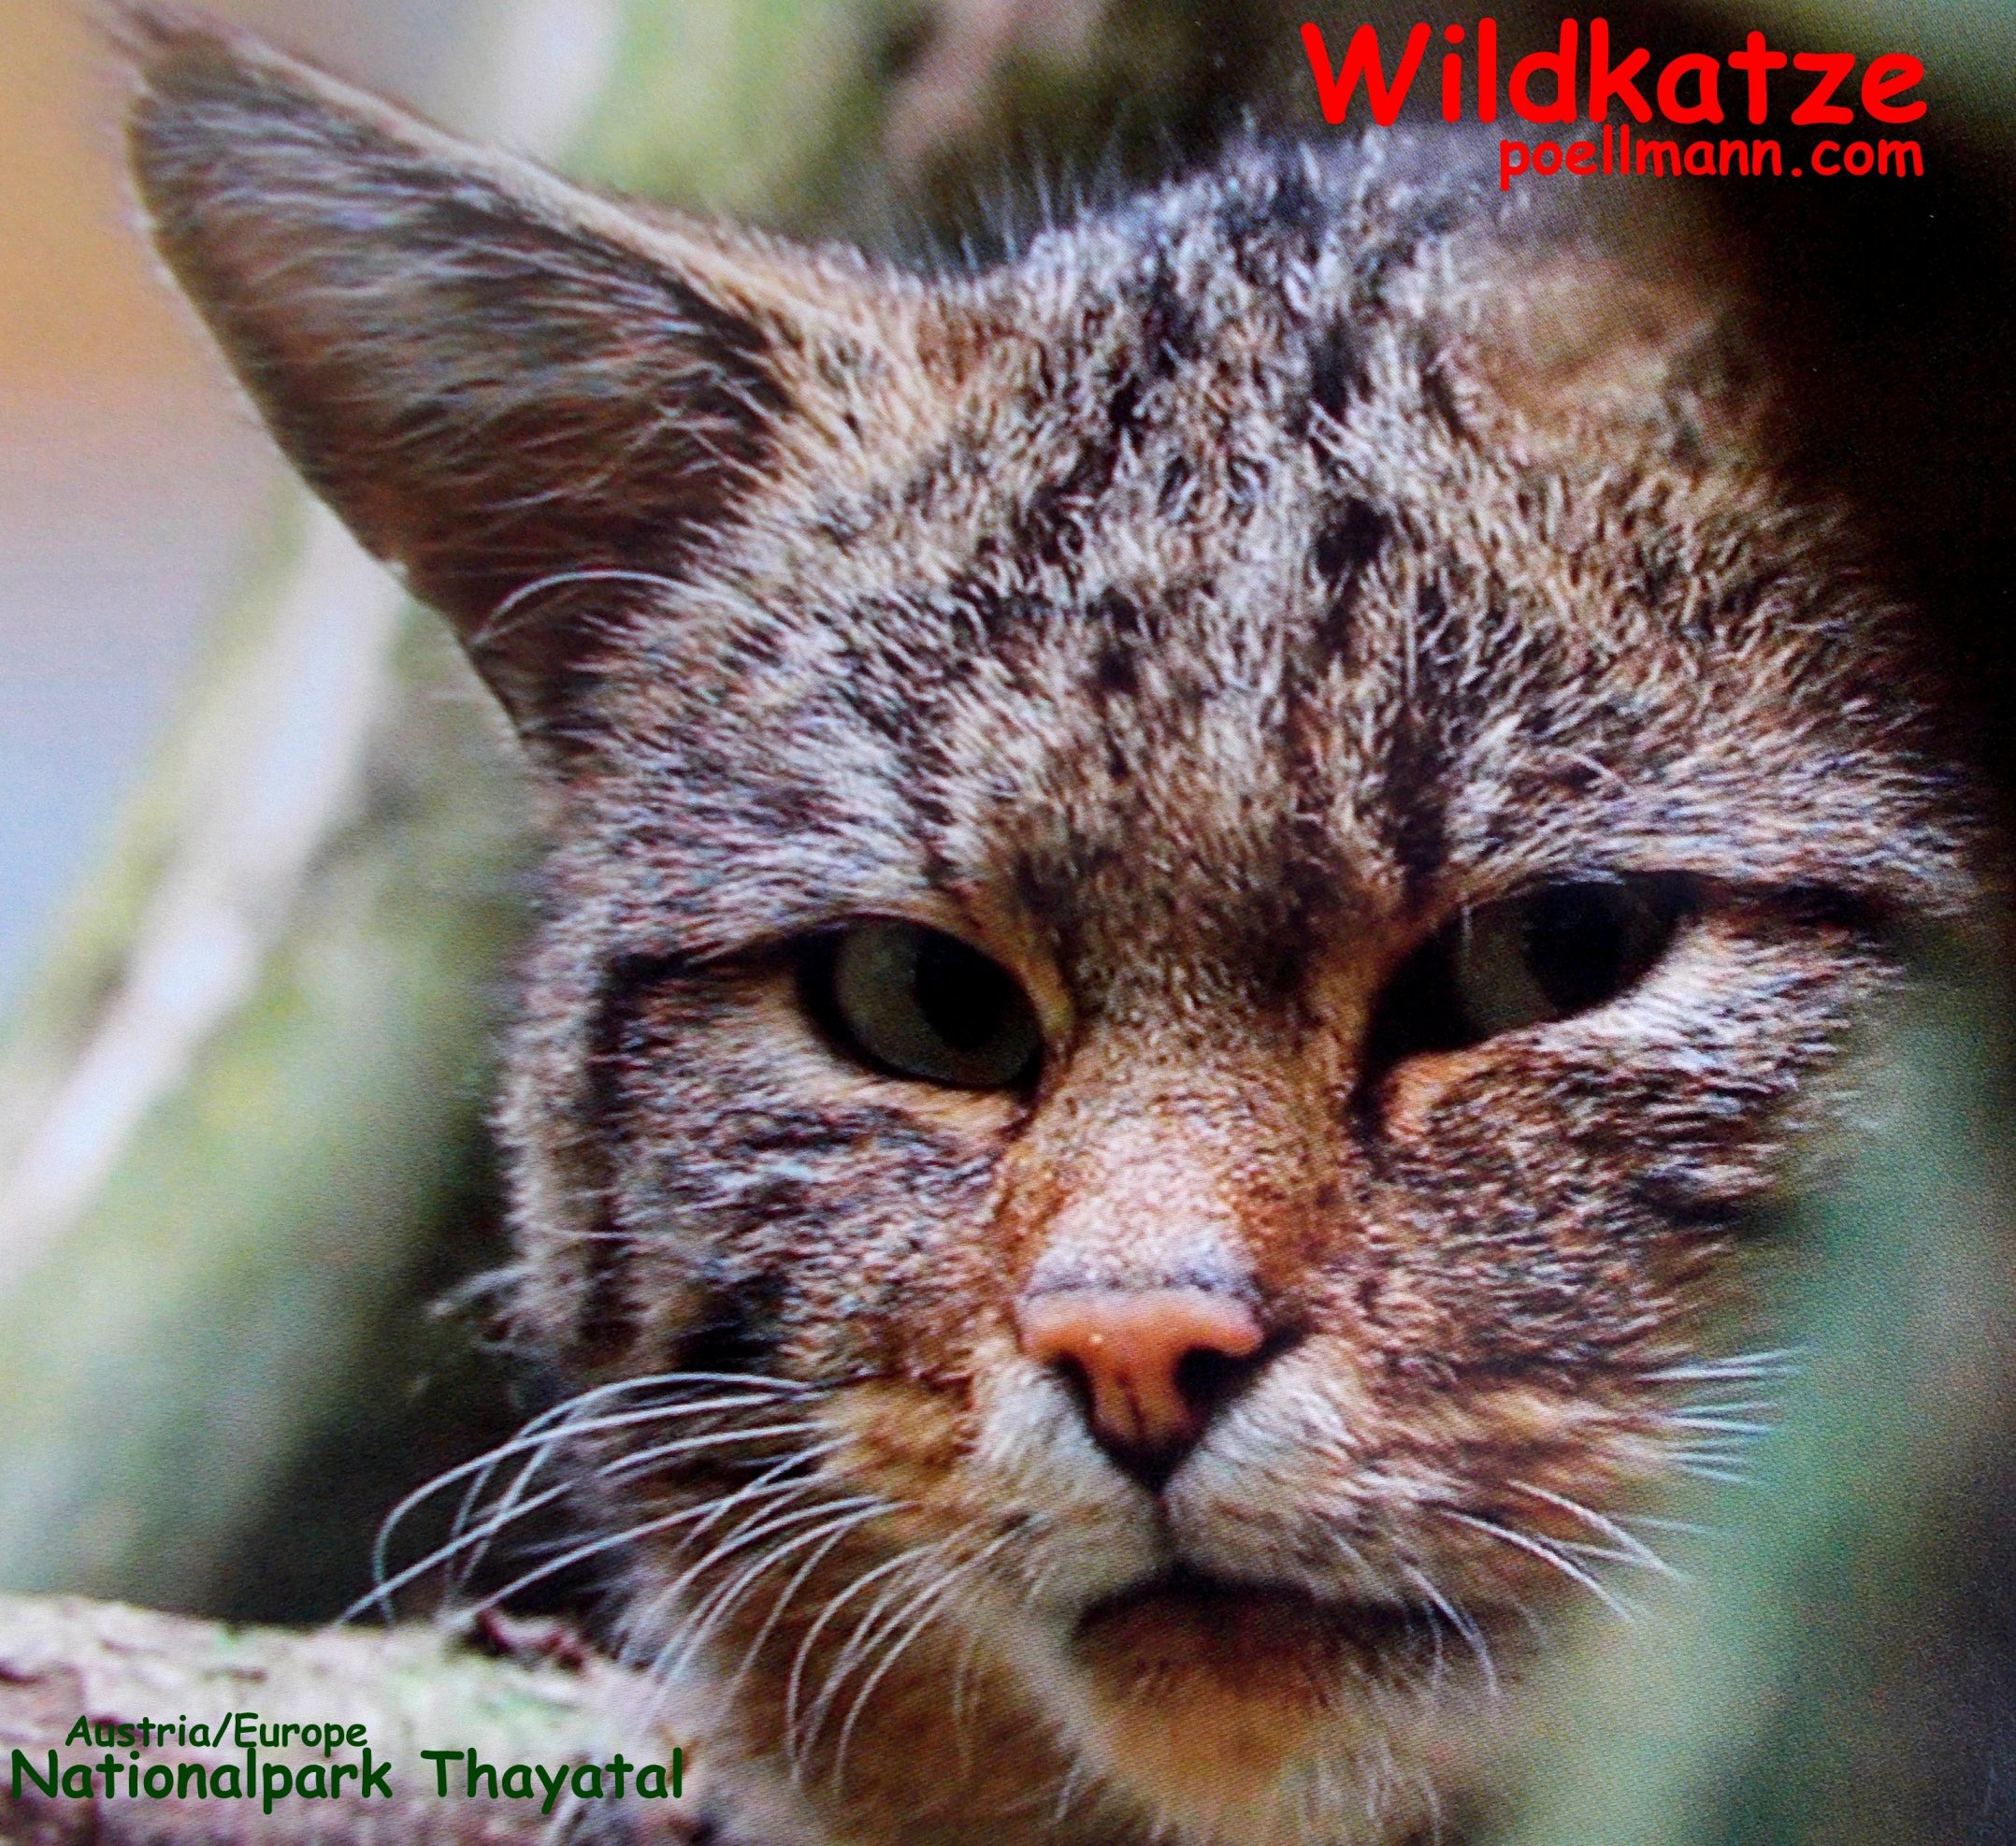 Wildkatze, Wildcat